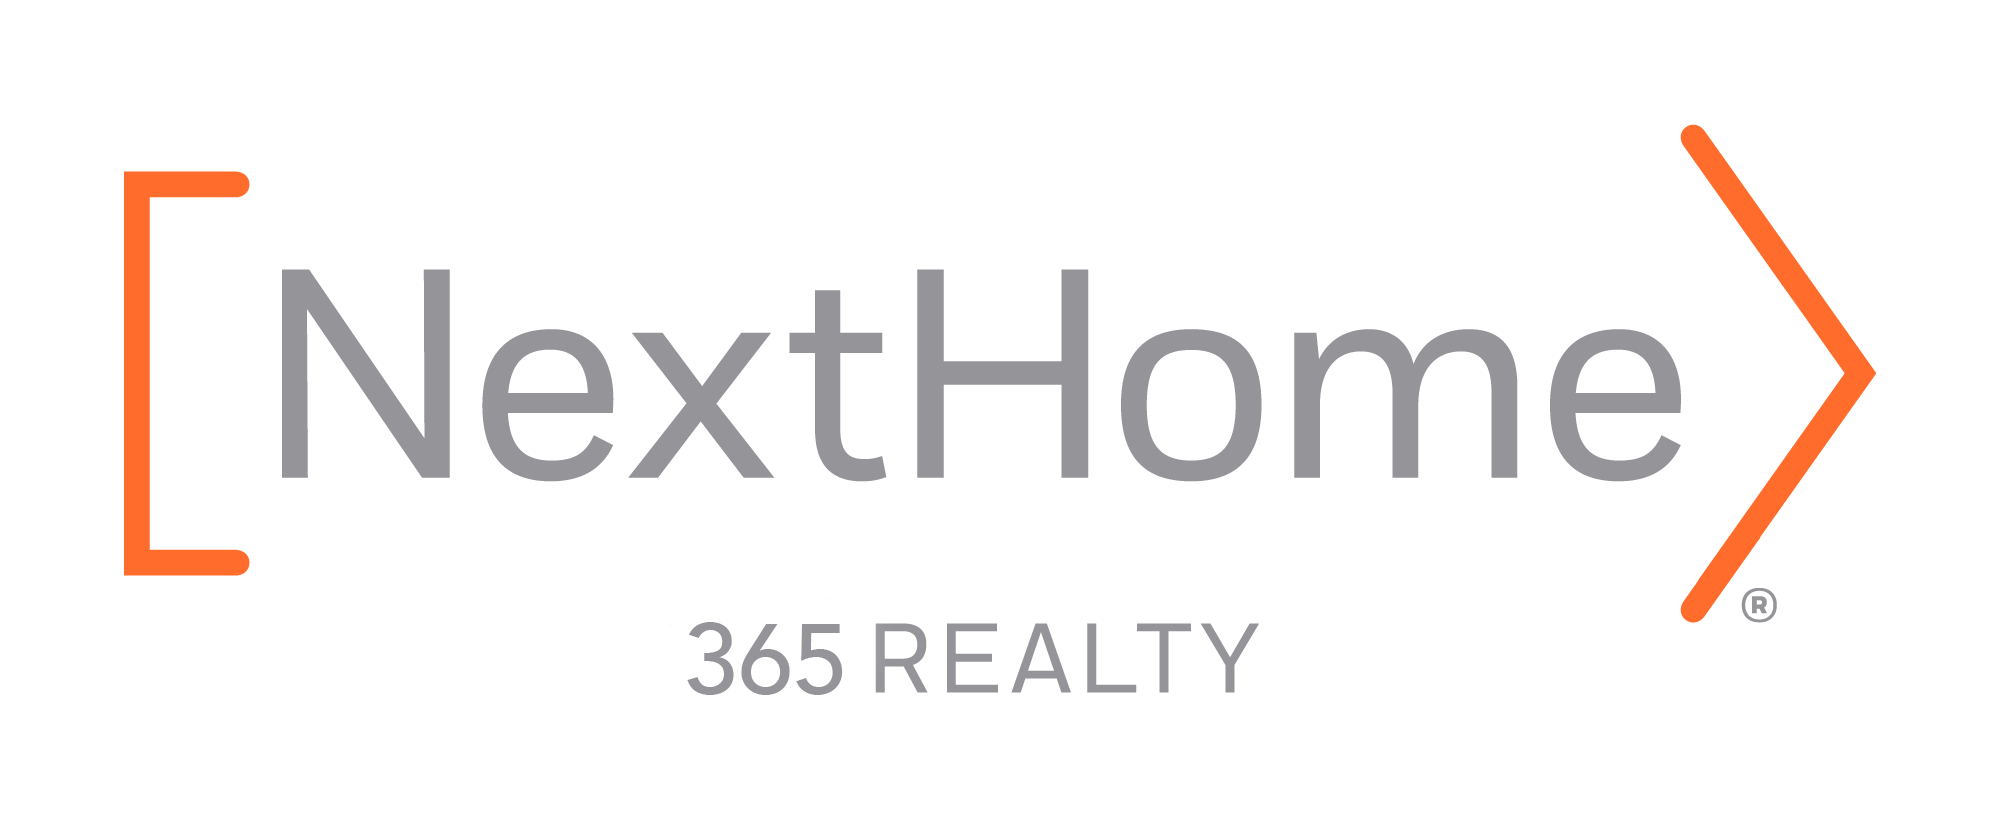 NextHome 365 Realty